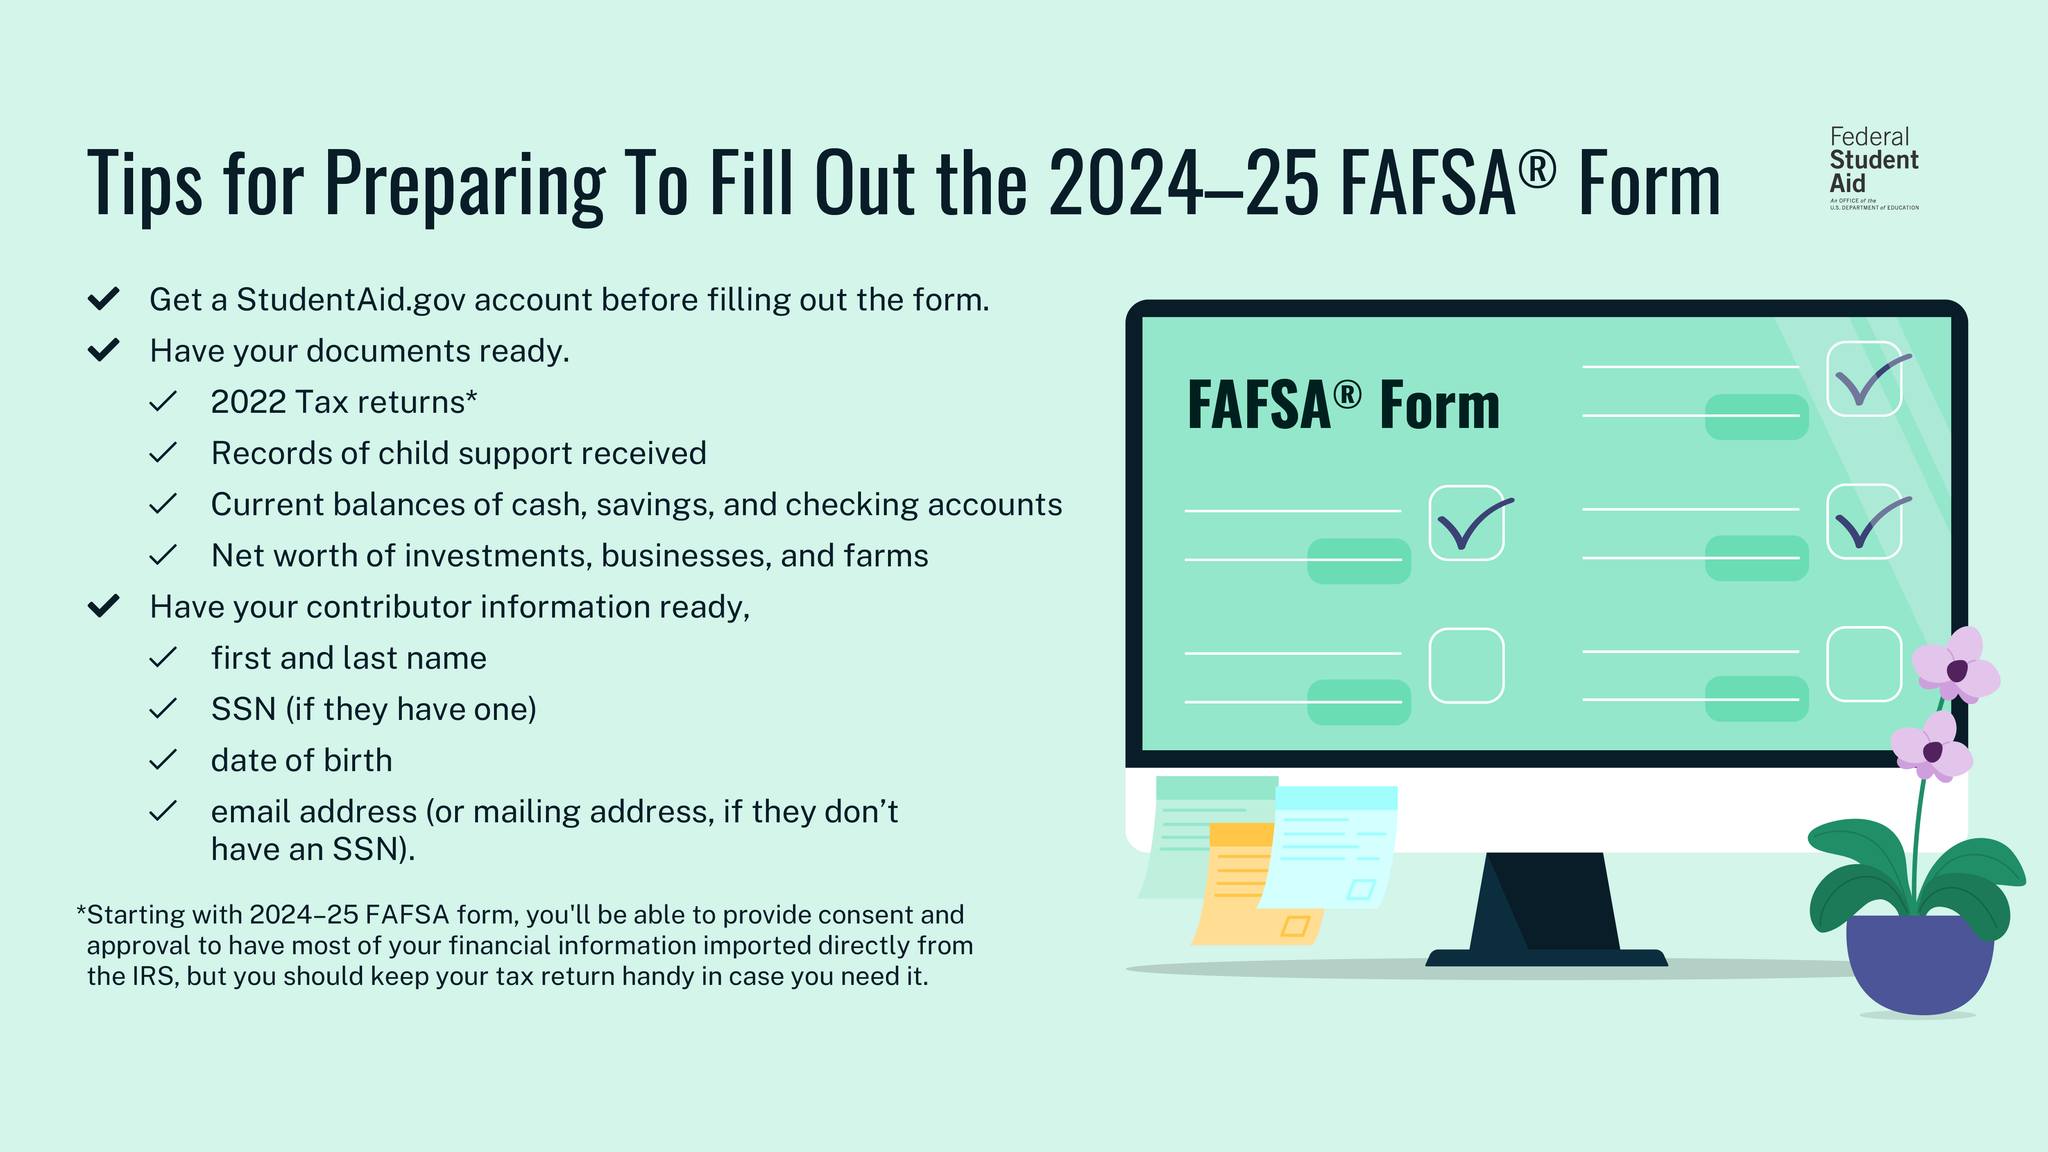 How to invite contributors to FAFSA